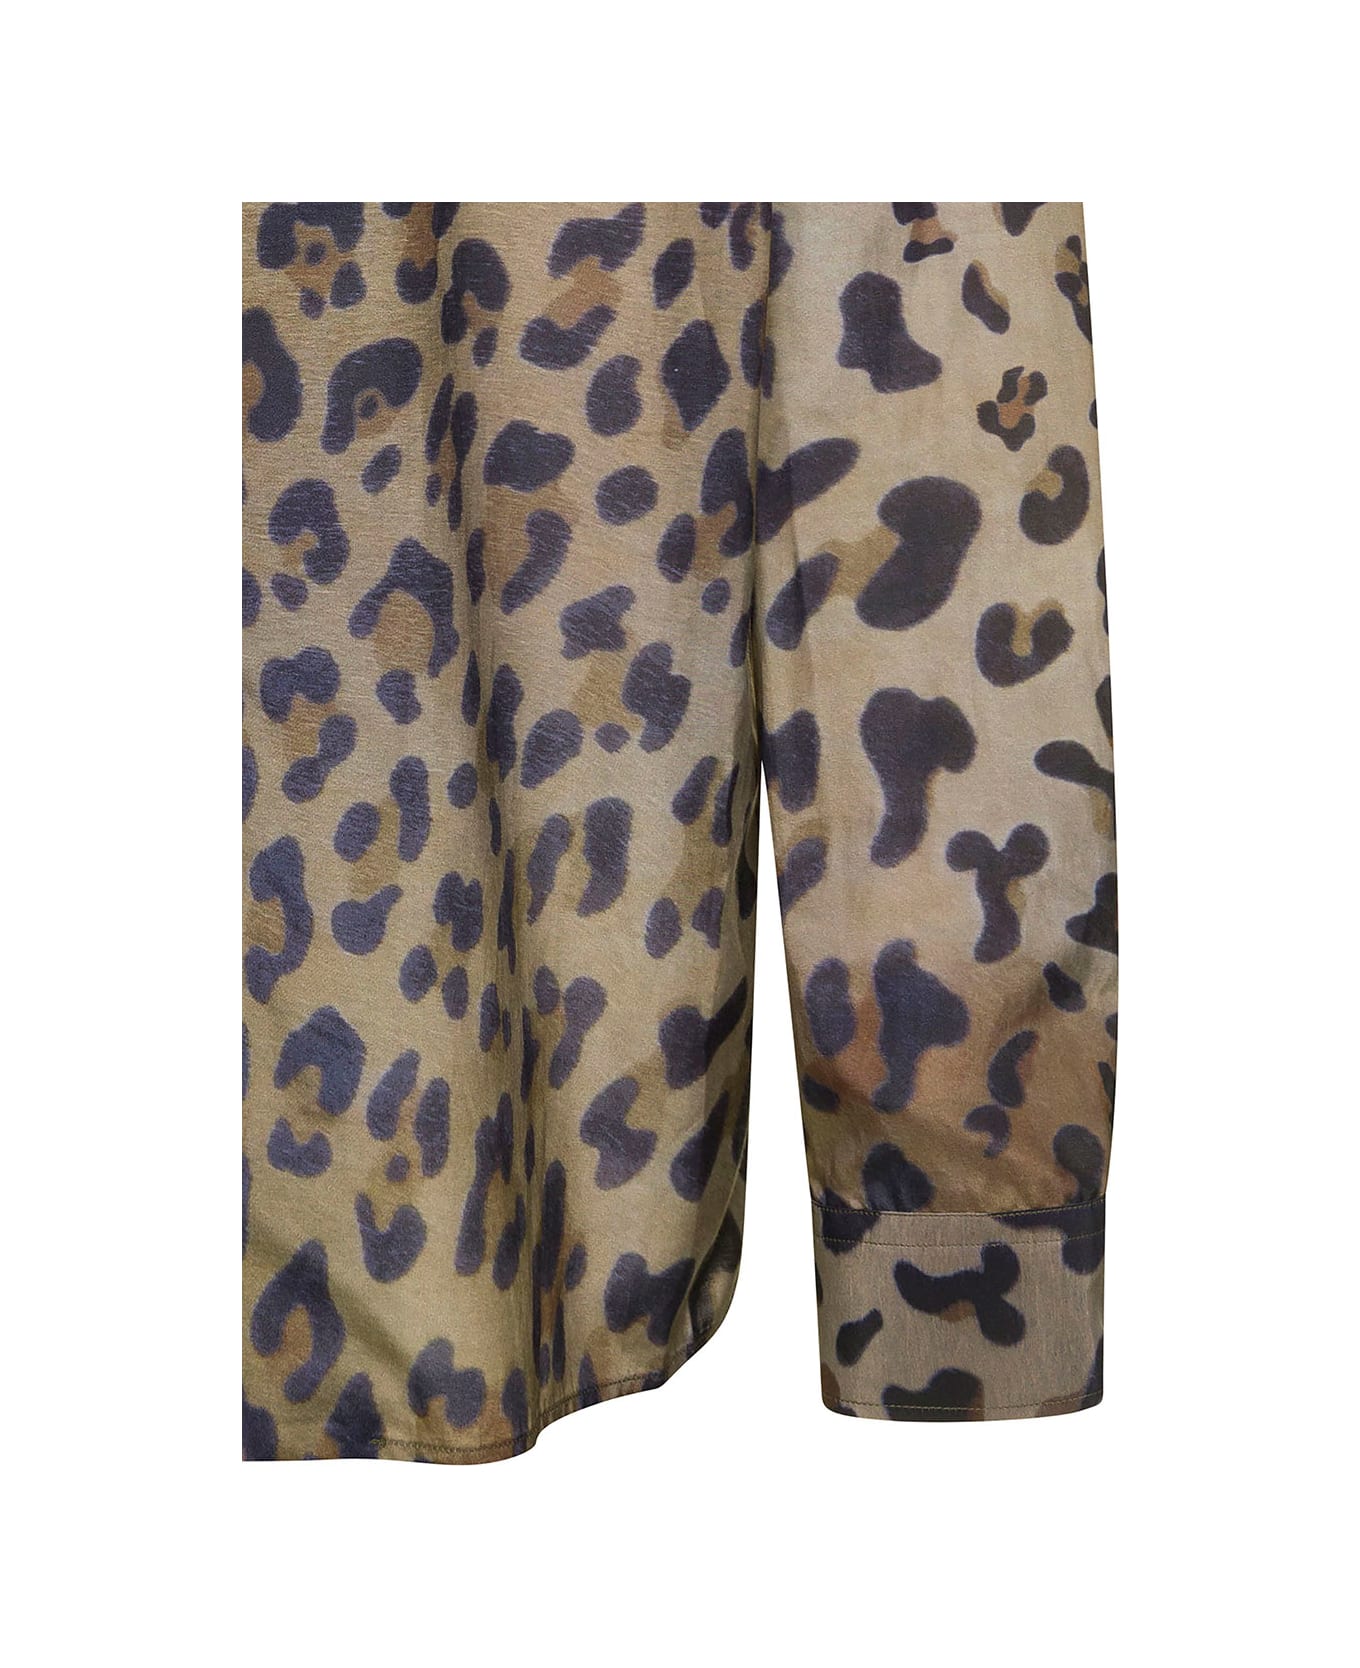 Balmain Brown Loose Leopard Printed Pyjama Shirt In Cotton Blend Woman - Green